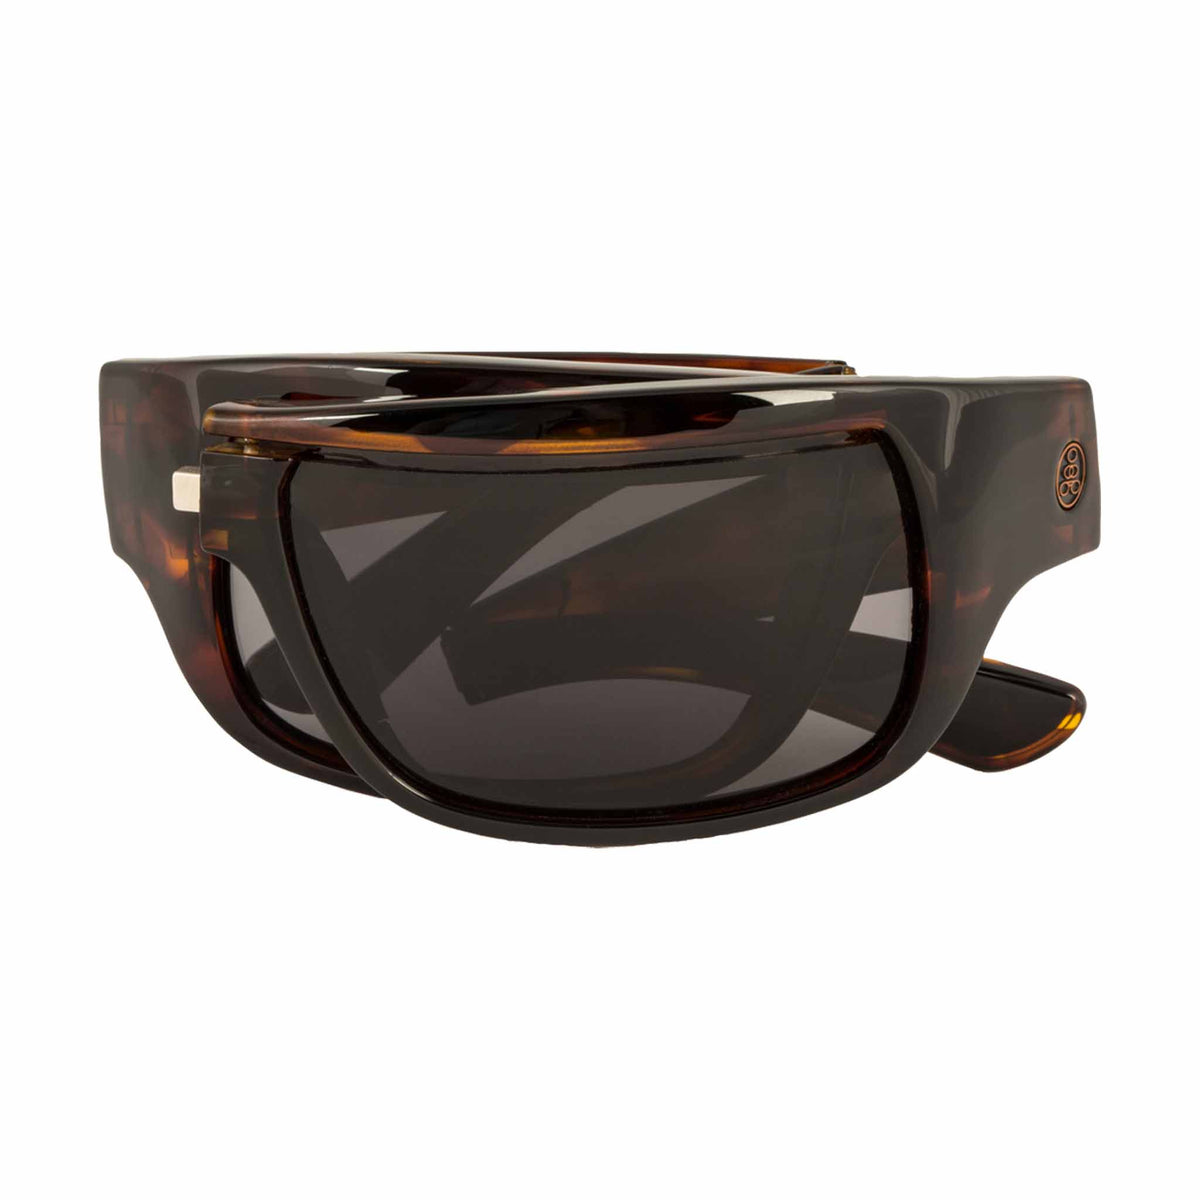 Popticals, Premium Compact Sunglasses, PopH2O, 010070-CTGP, Polarized Sunglasses, Gloss Tortoise Frame, Gray Lenses, Compact View